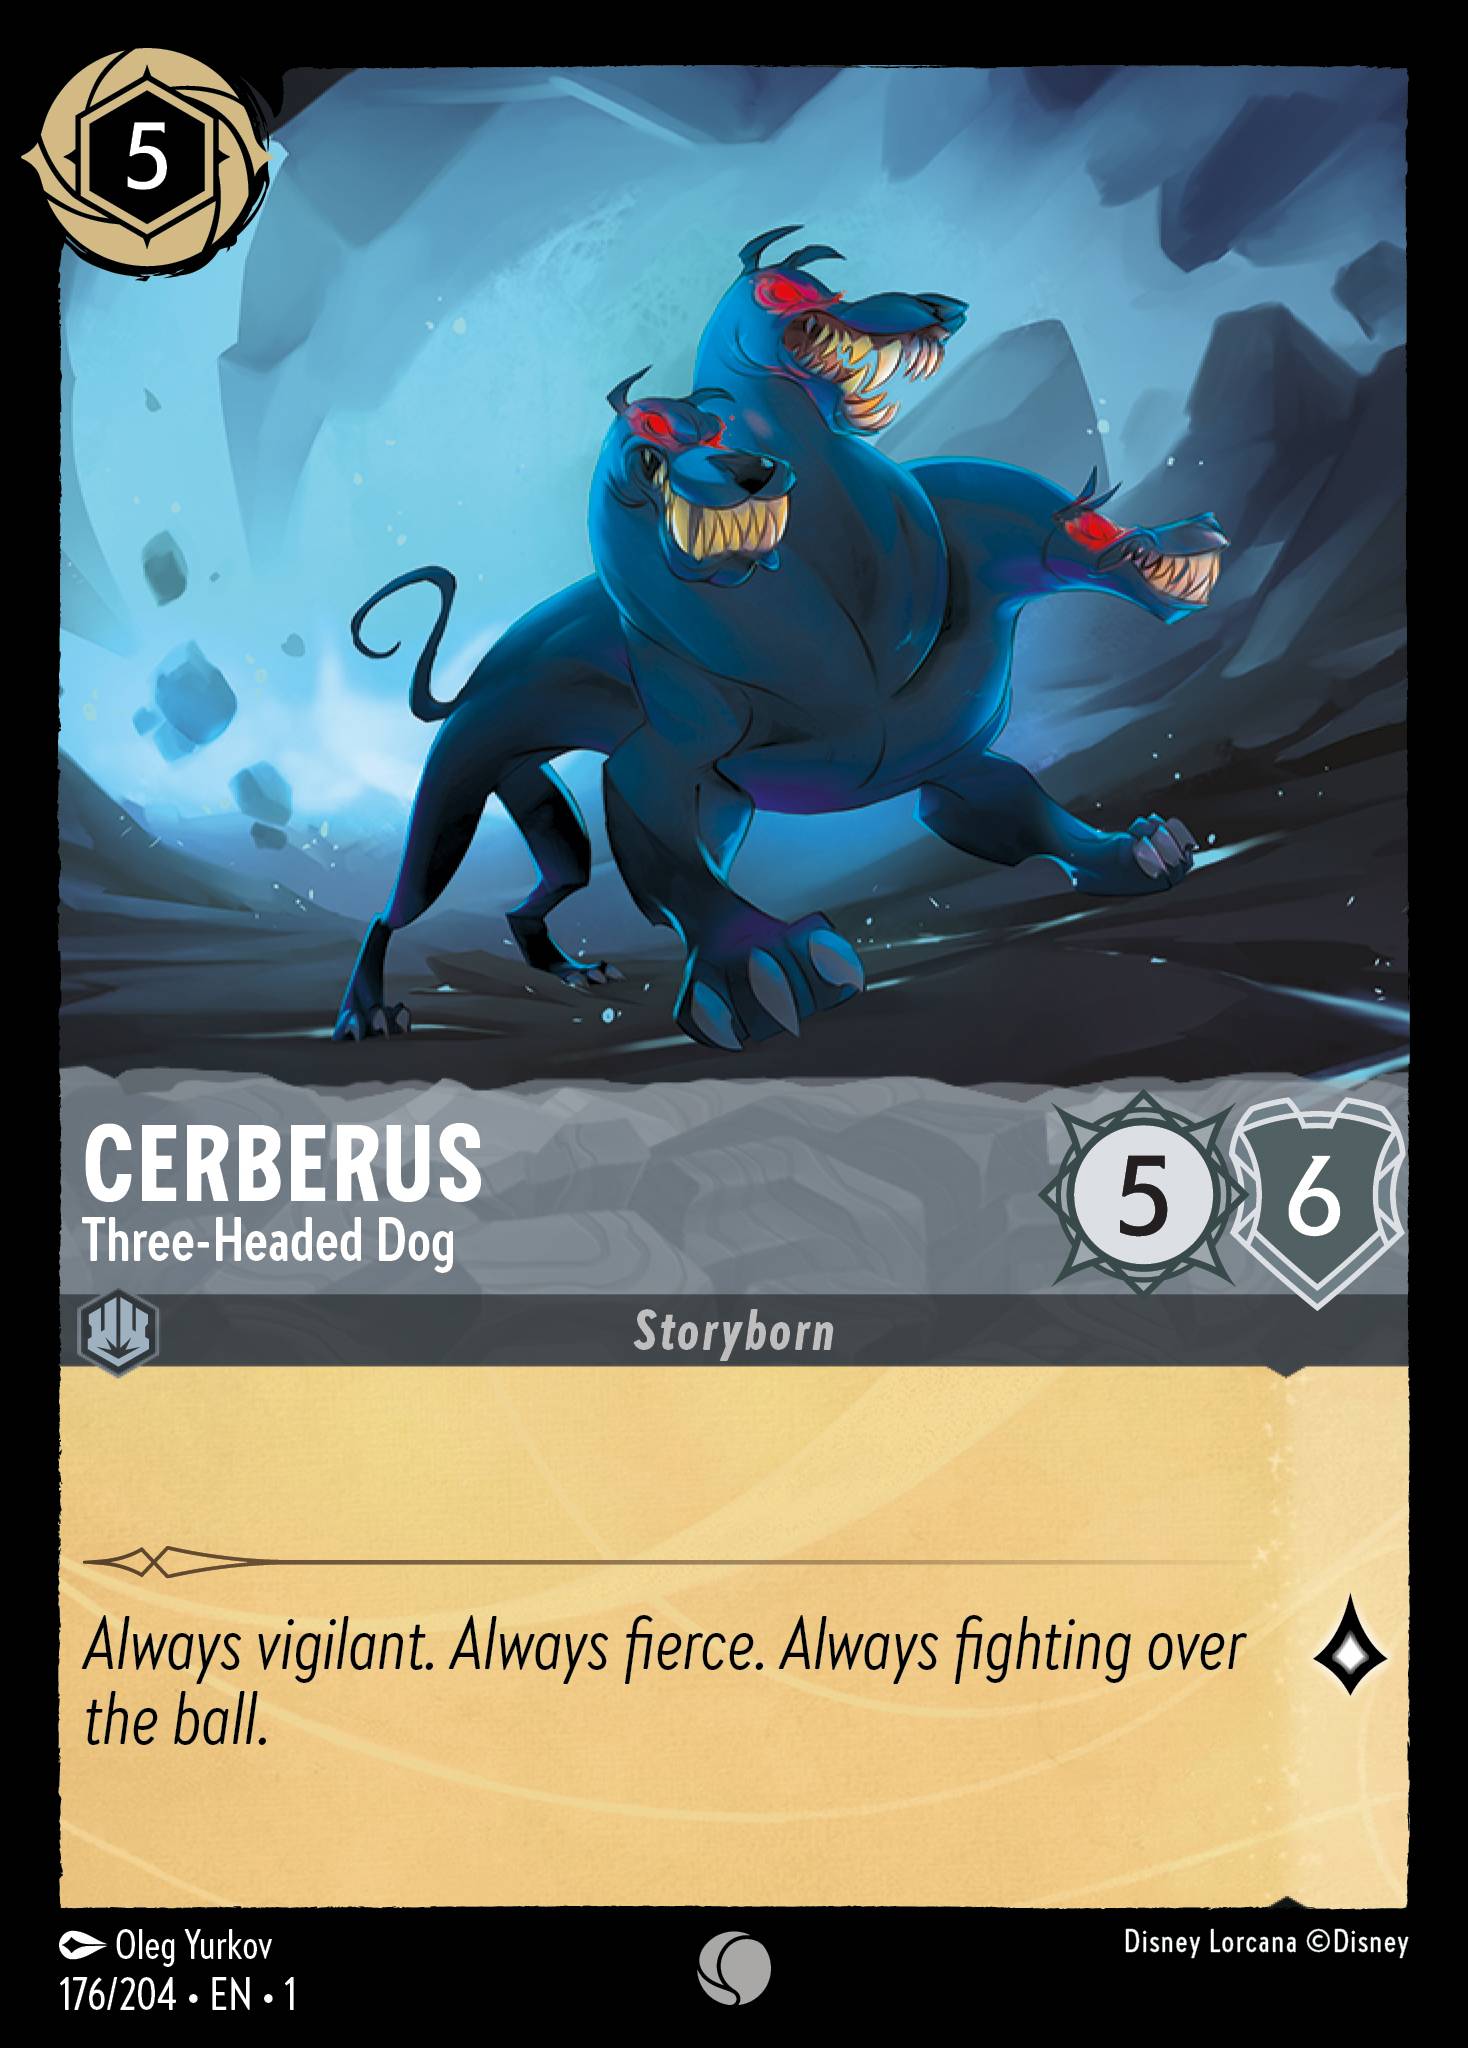 CERBERUS - Three-Headed Dog